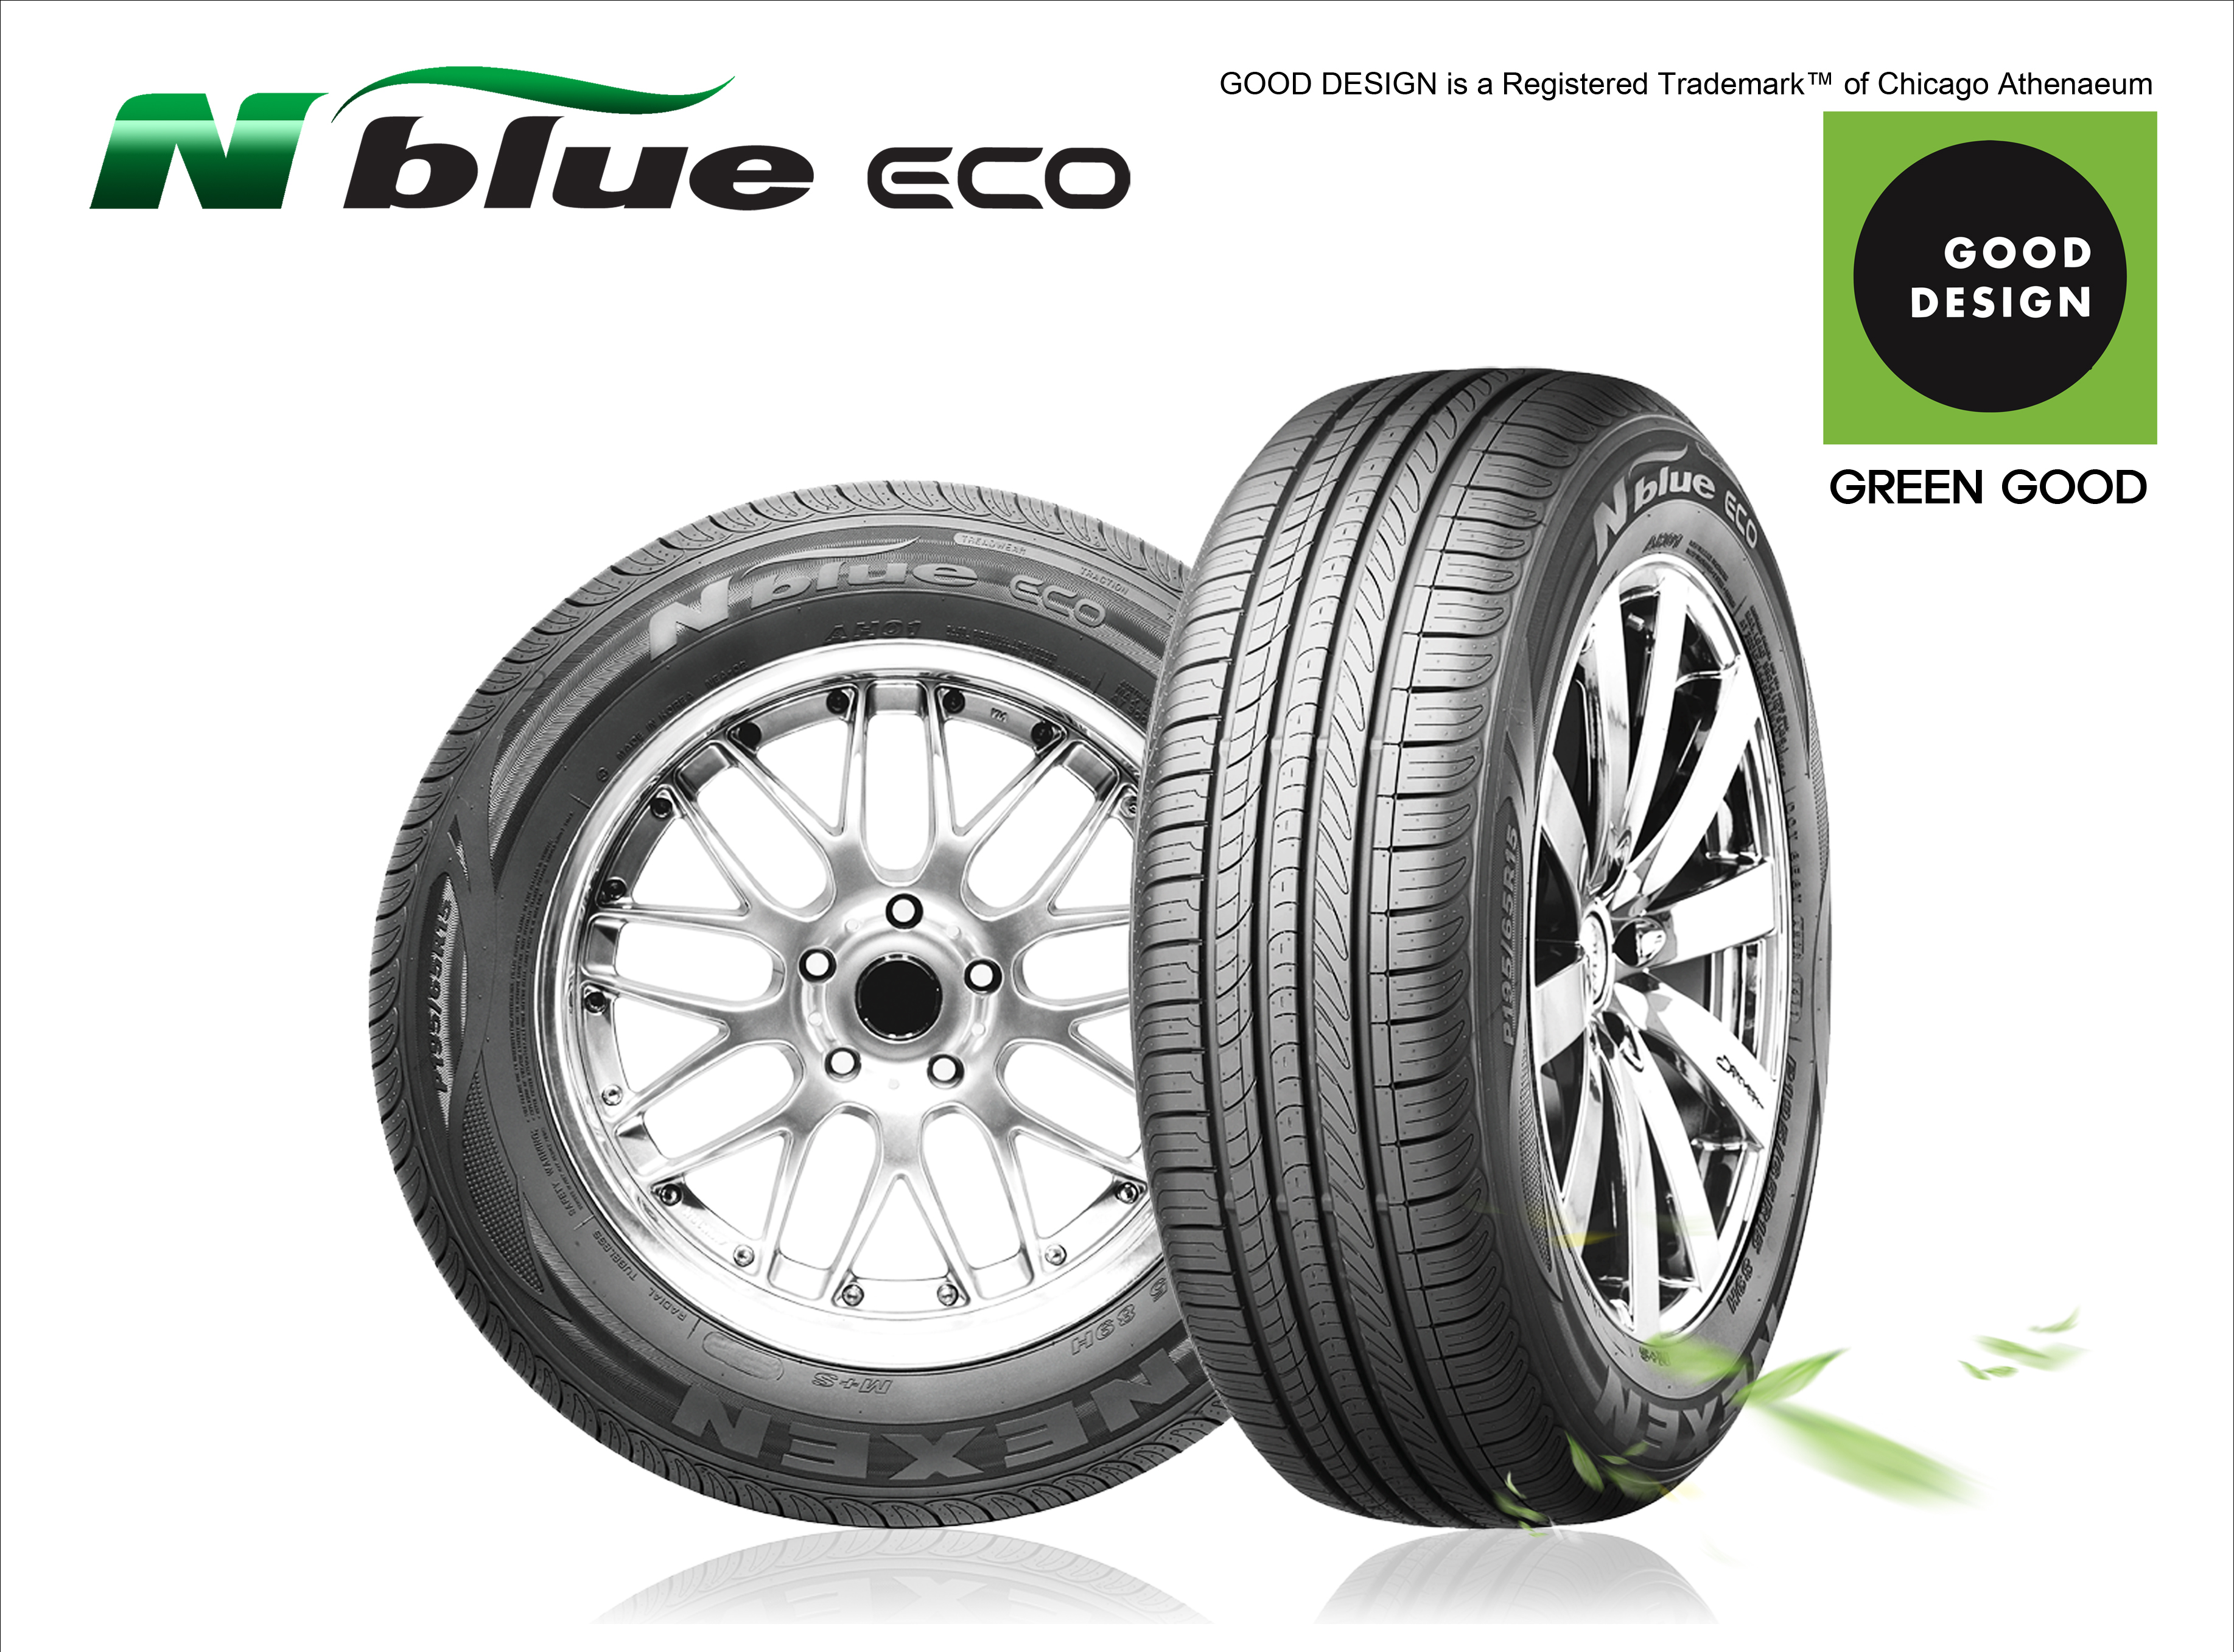 Nexen N’blue eco tyre wins US green design award